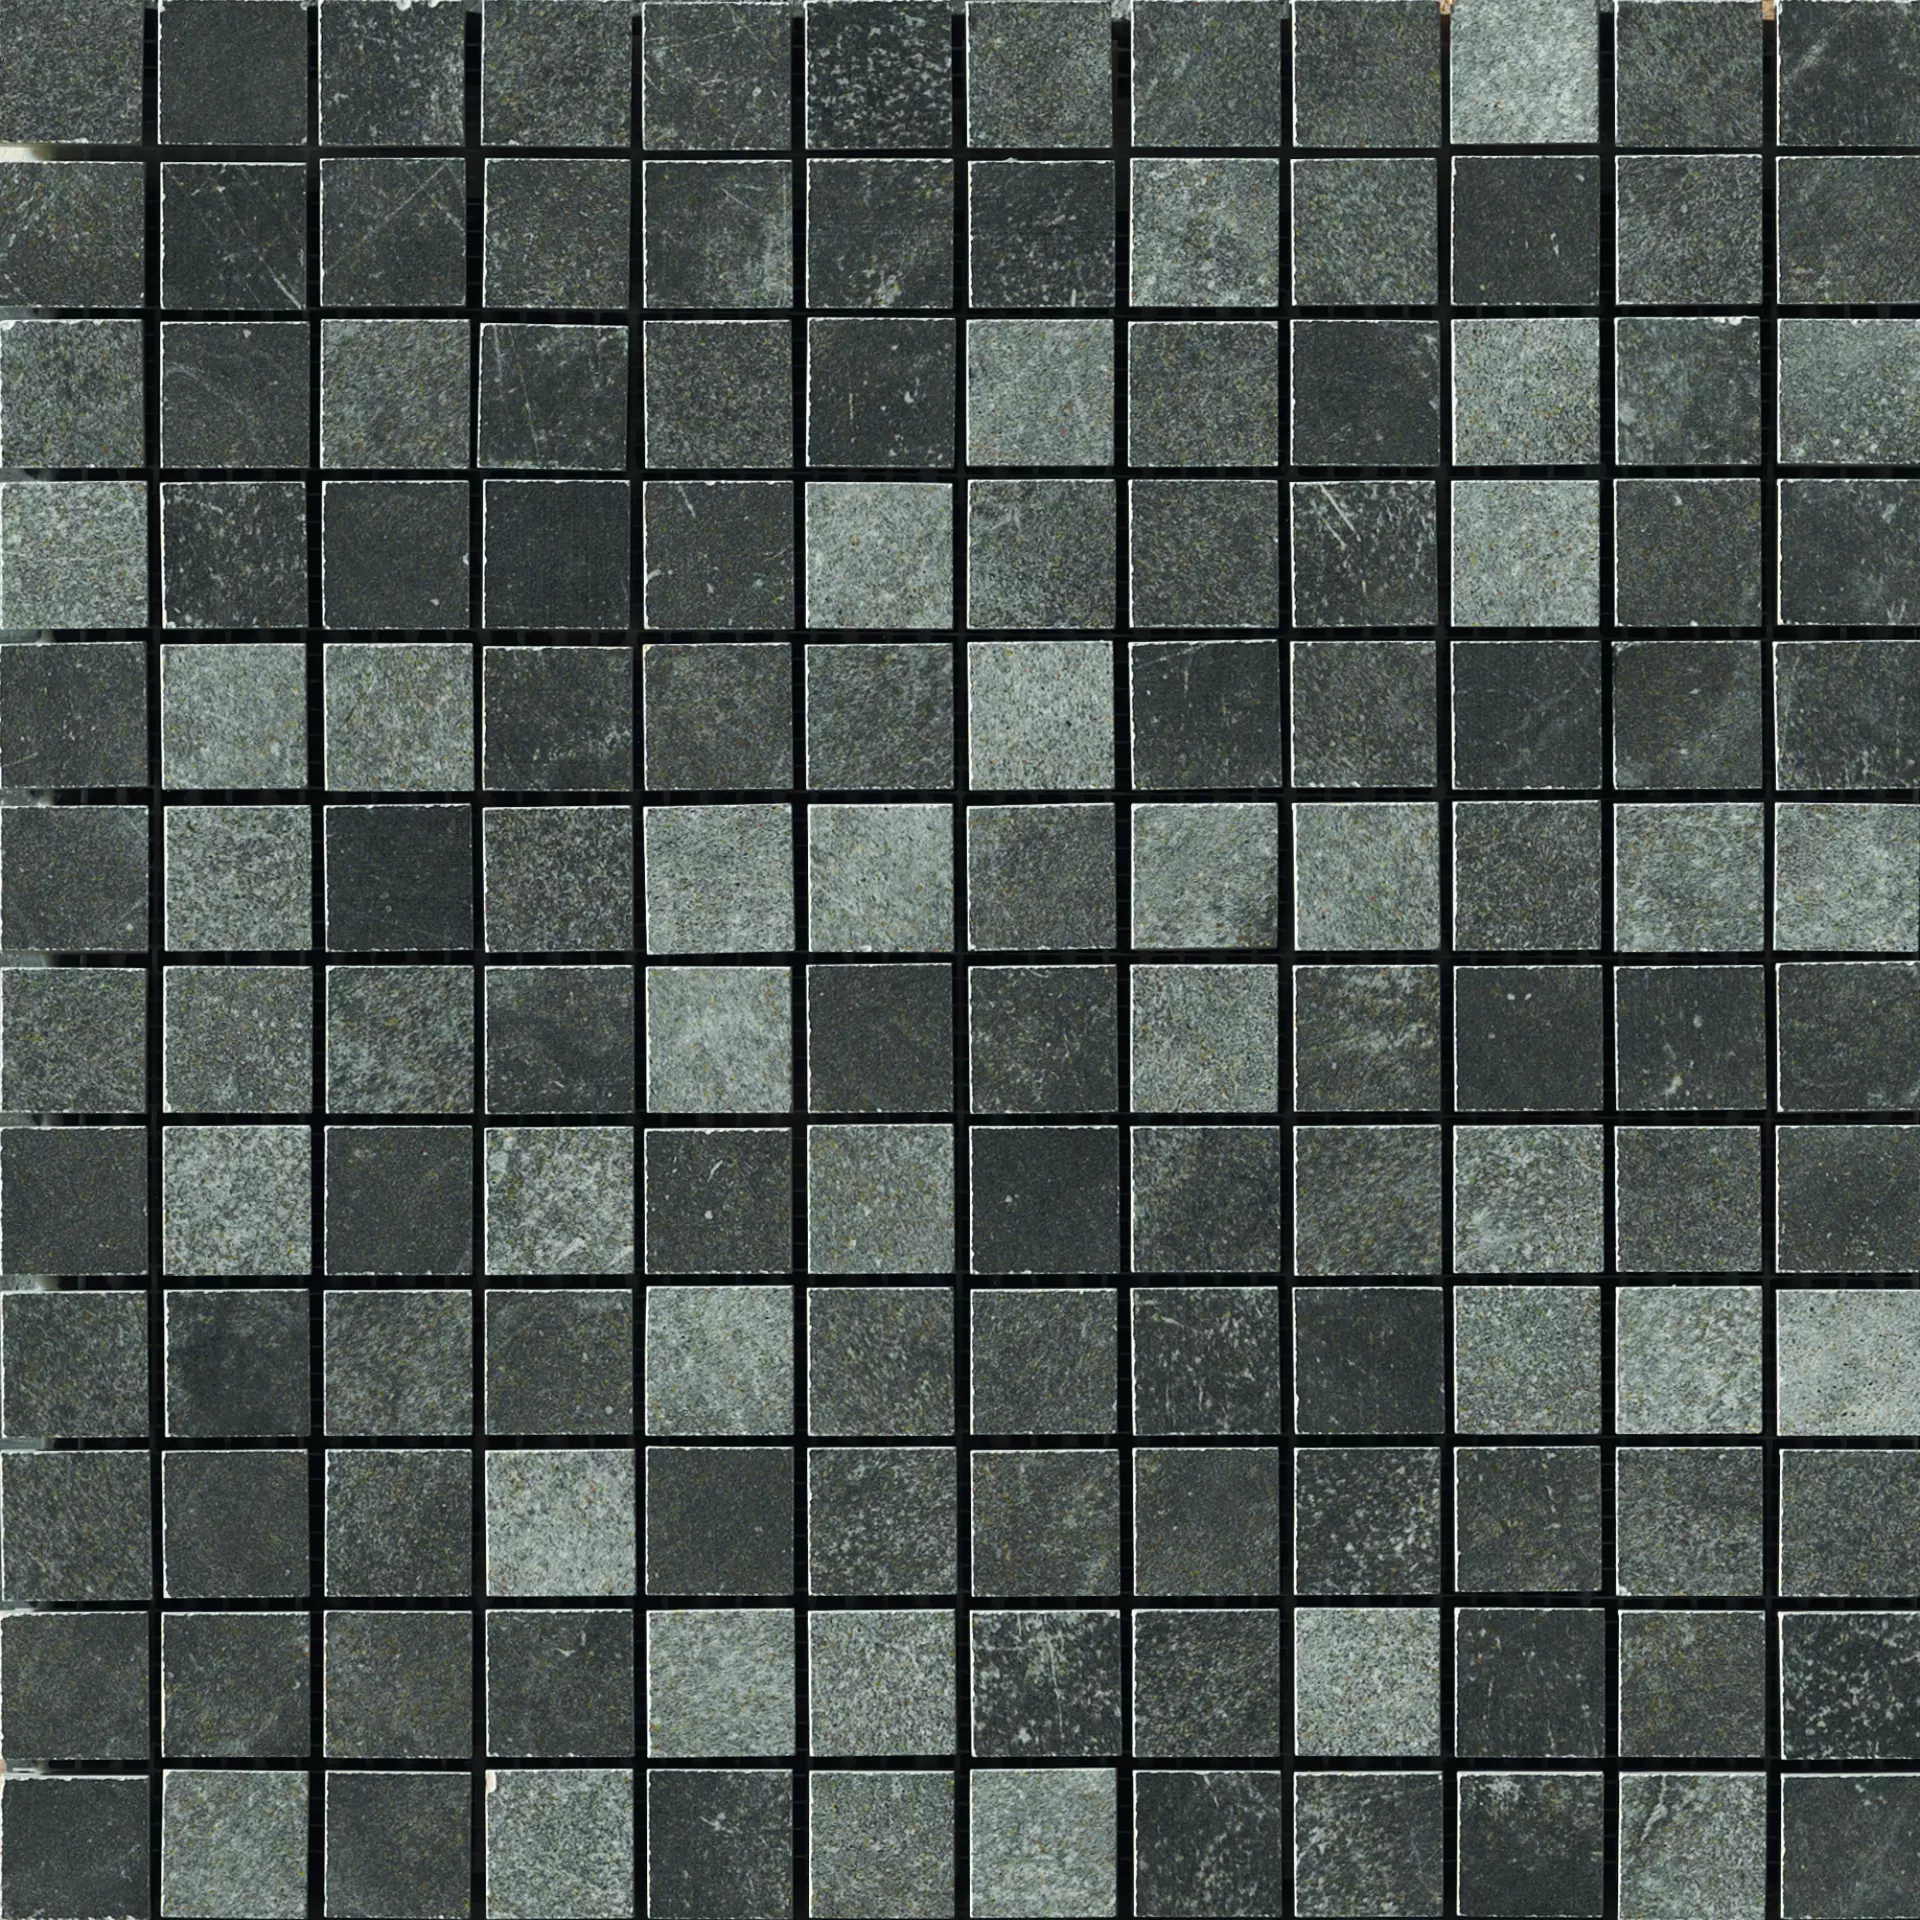 CIR Miami Pitch Black Naturale Mosaic 1064130 30x30cm 10mm